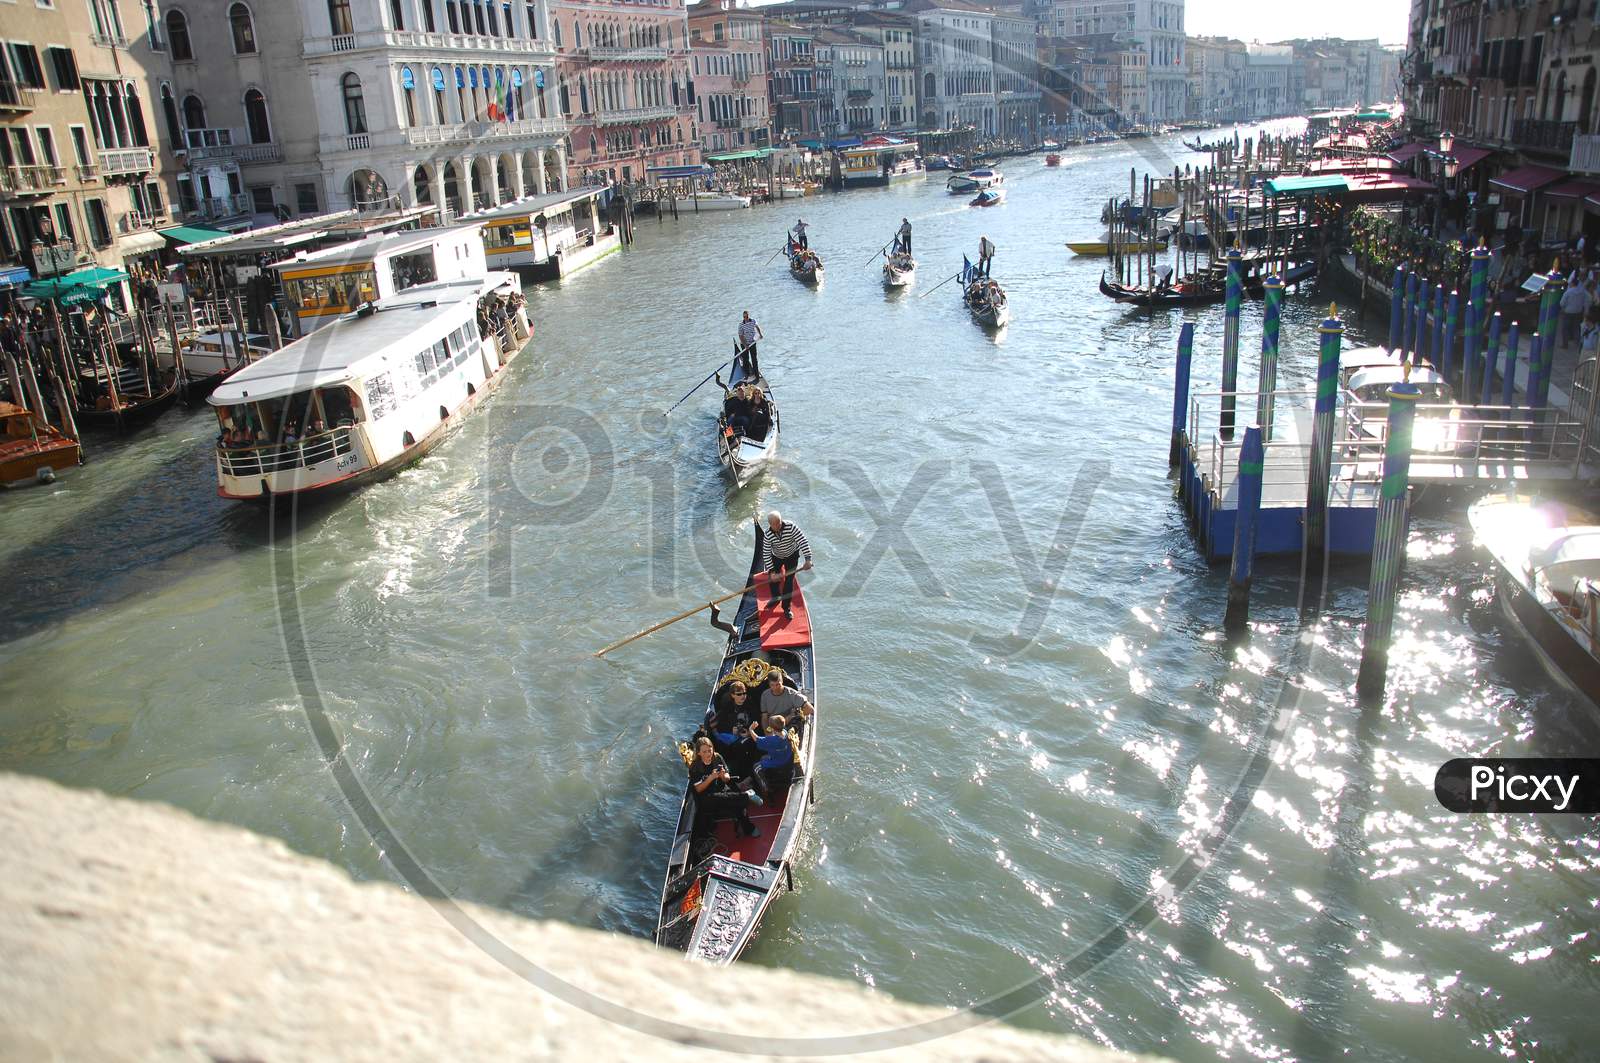 Tourists enjoying the gondola boat rides through the Grand canal